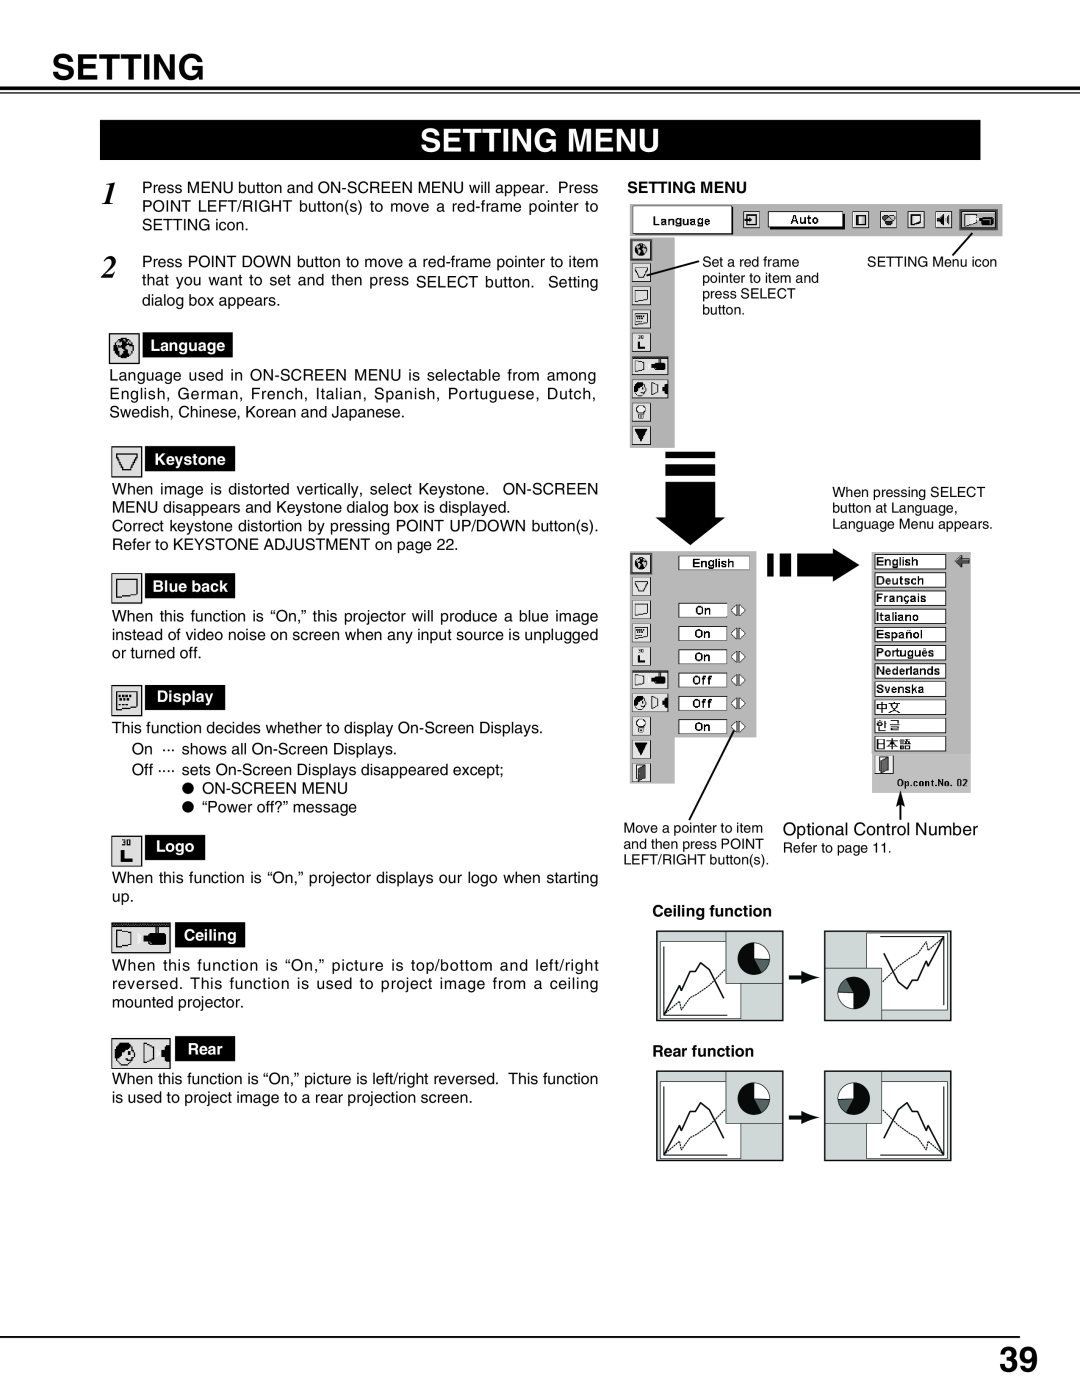 Christie Digital Systems 38-VIV302-01 user manual Setting Menu, Ceiling function Rear function 